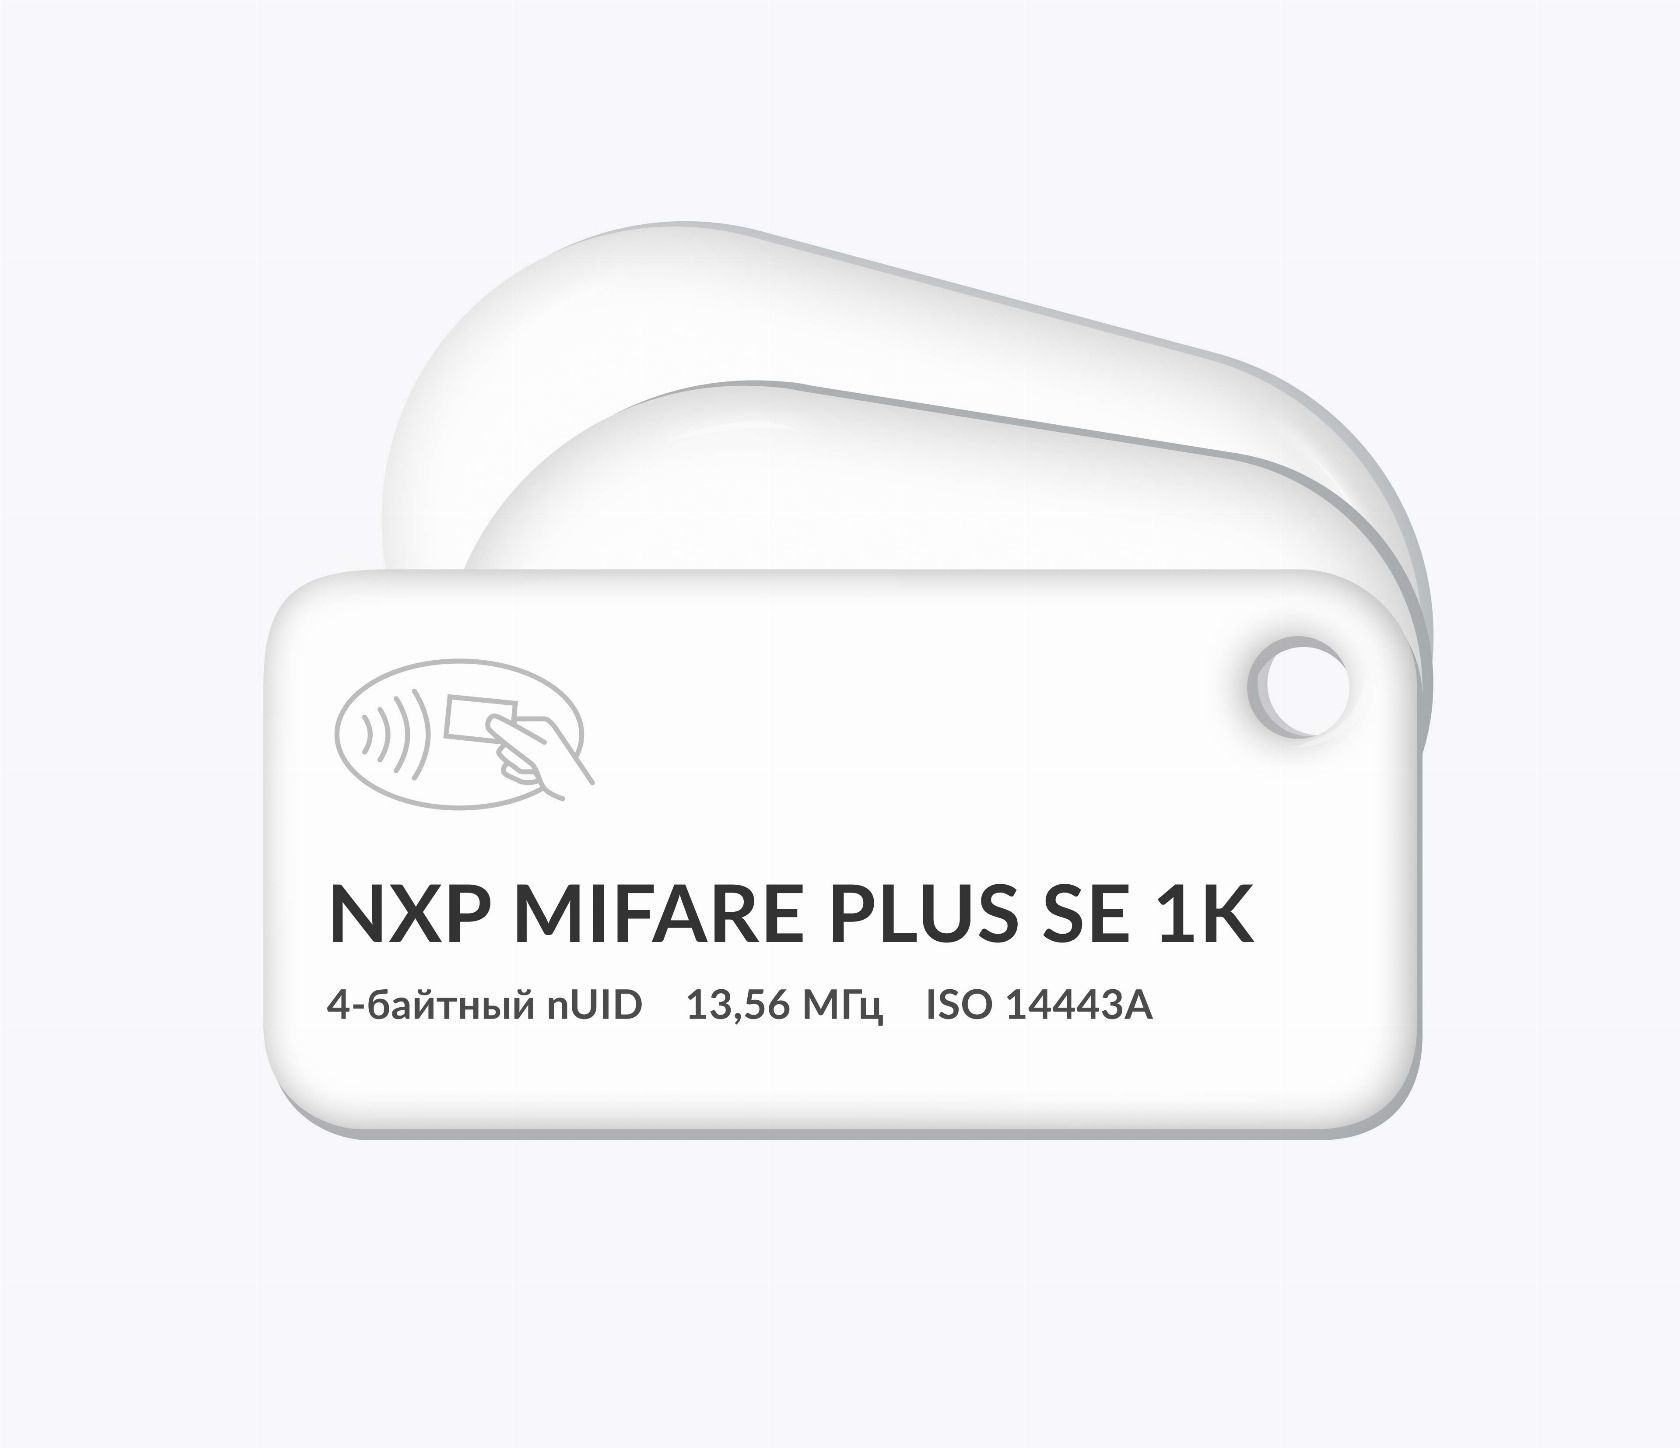 RFID-брелоки NEOKEY® с чипом NXP MIFARE Plus SE 1k 4 byte nUID и вашим логотипом